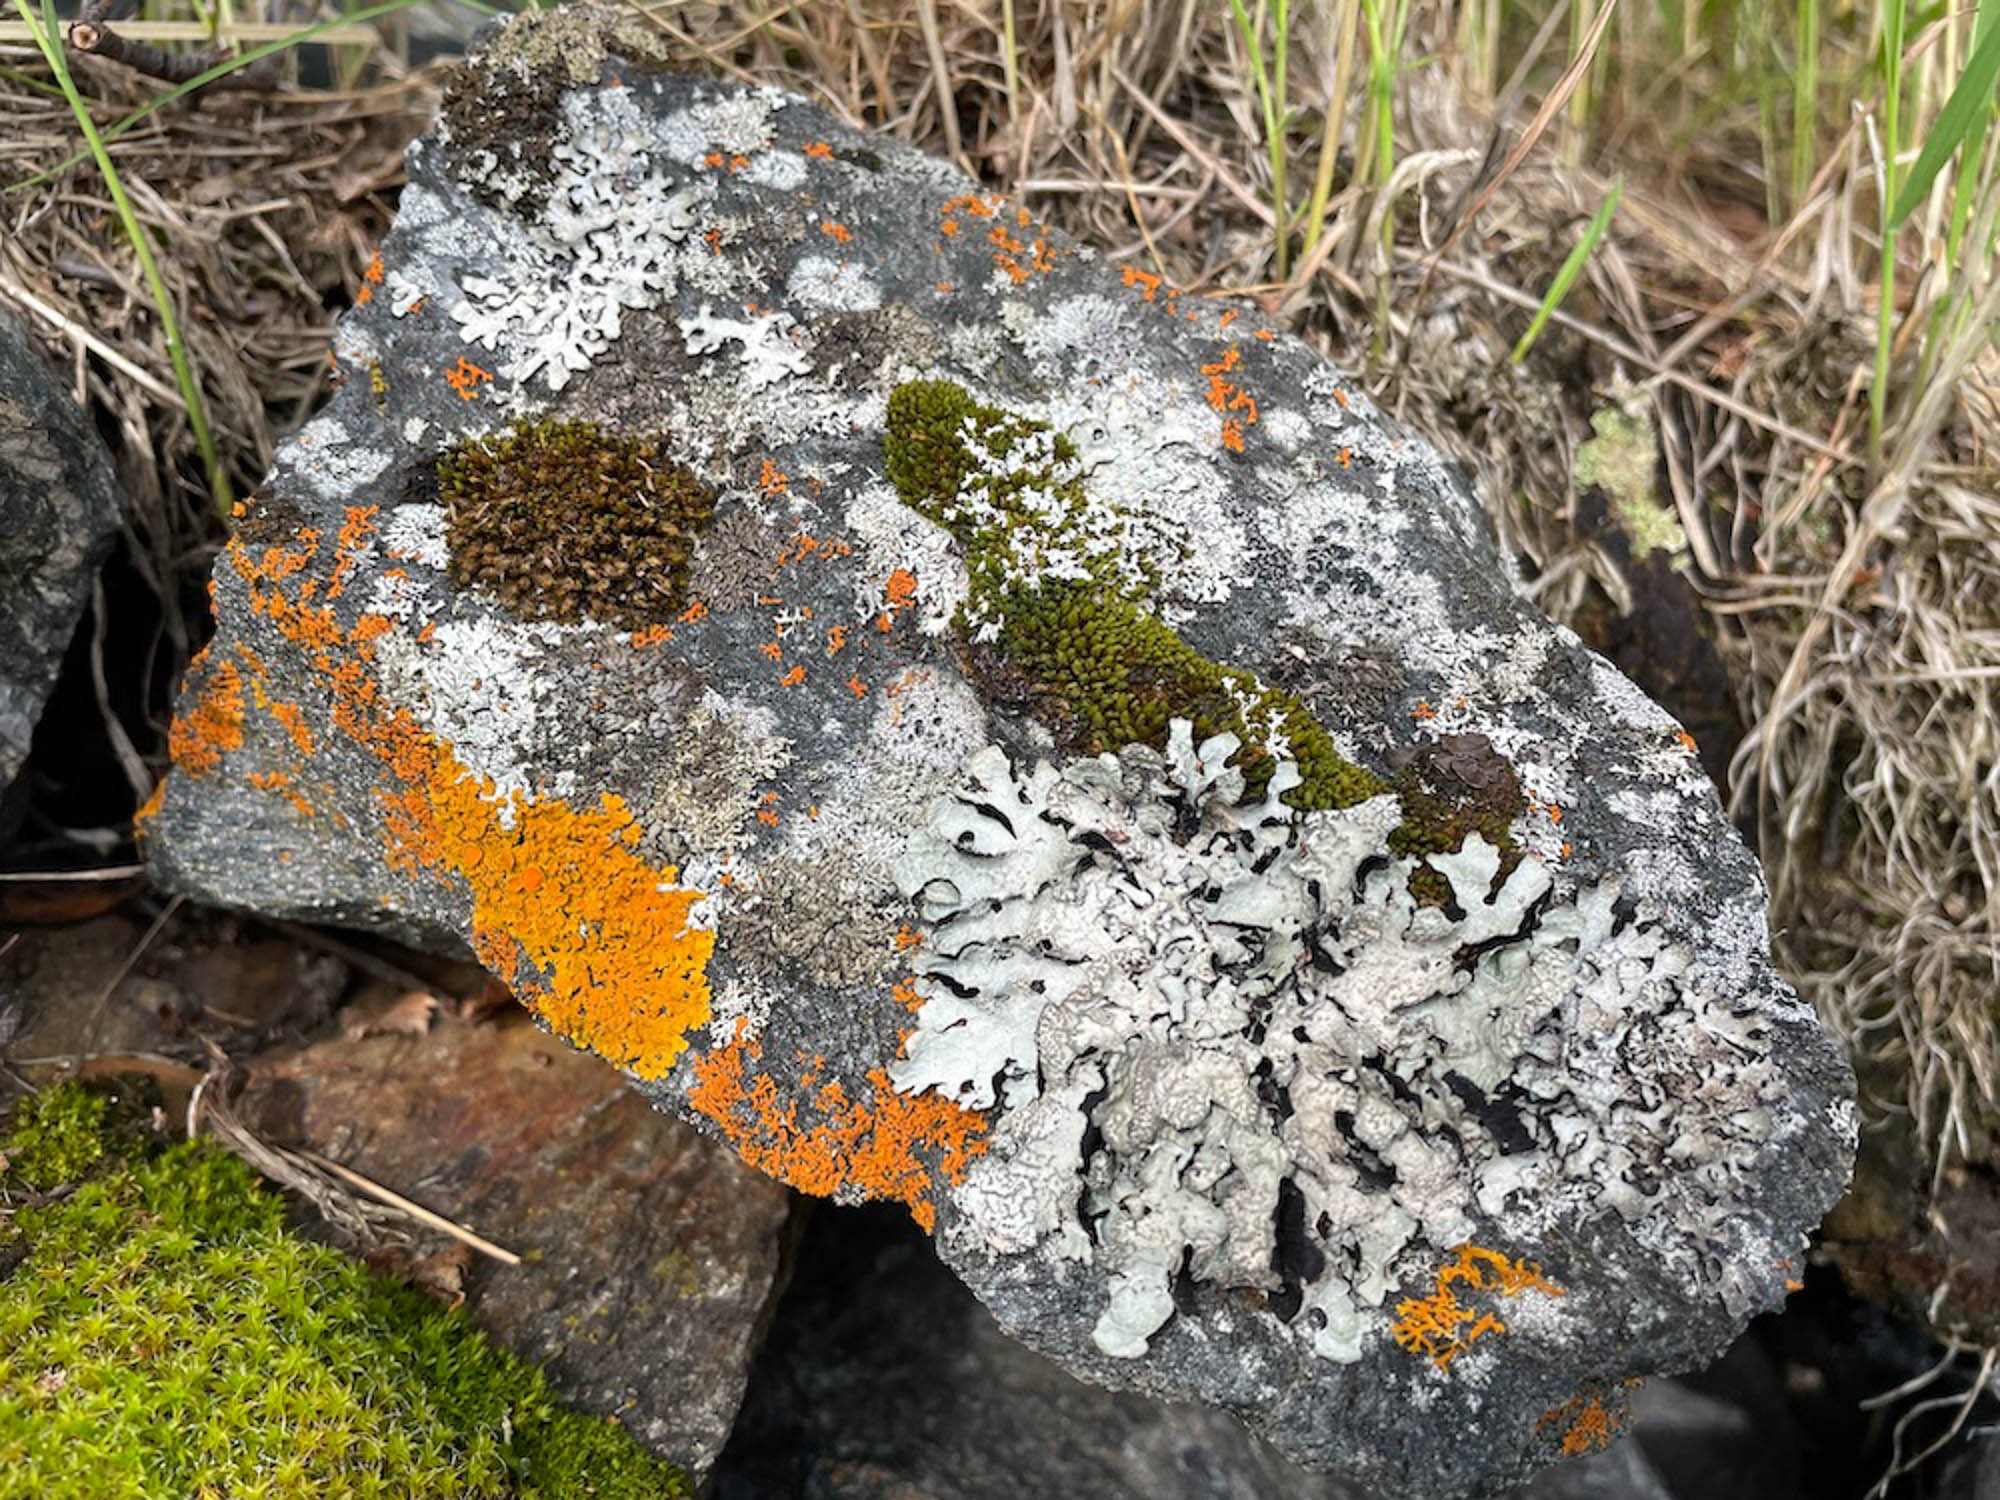  Rock with lichen. Photo: HC Gilje.  